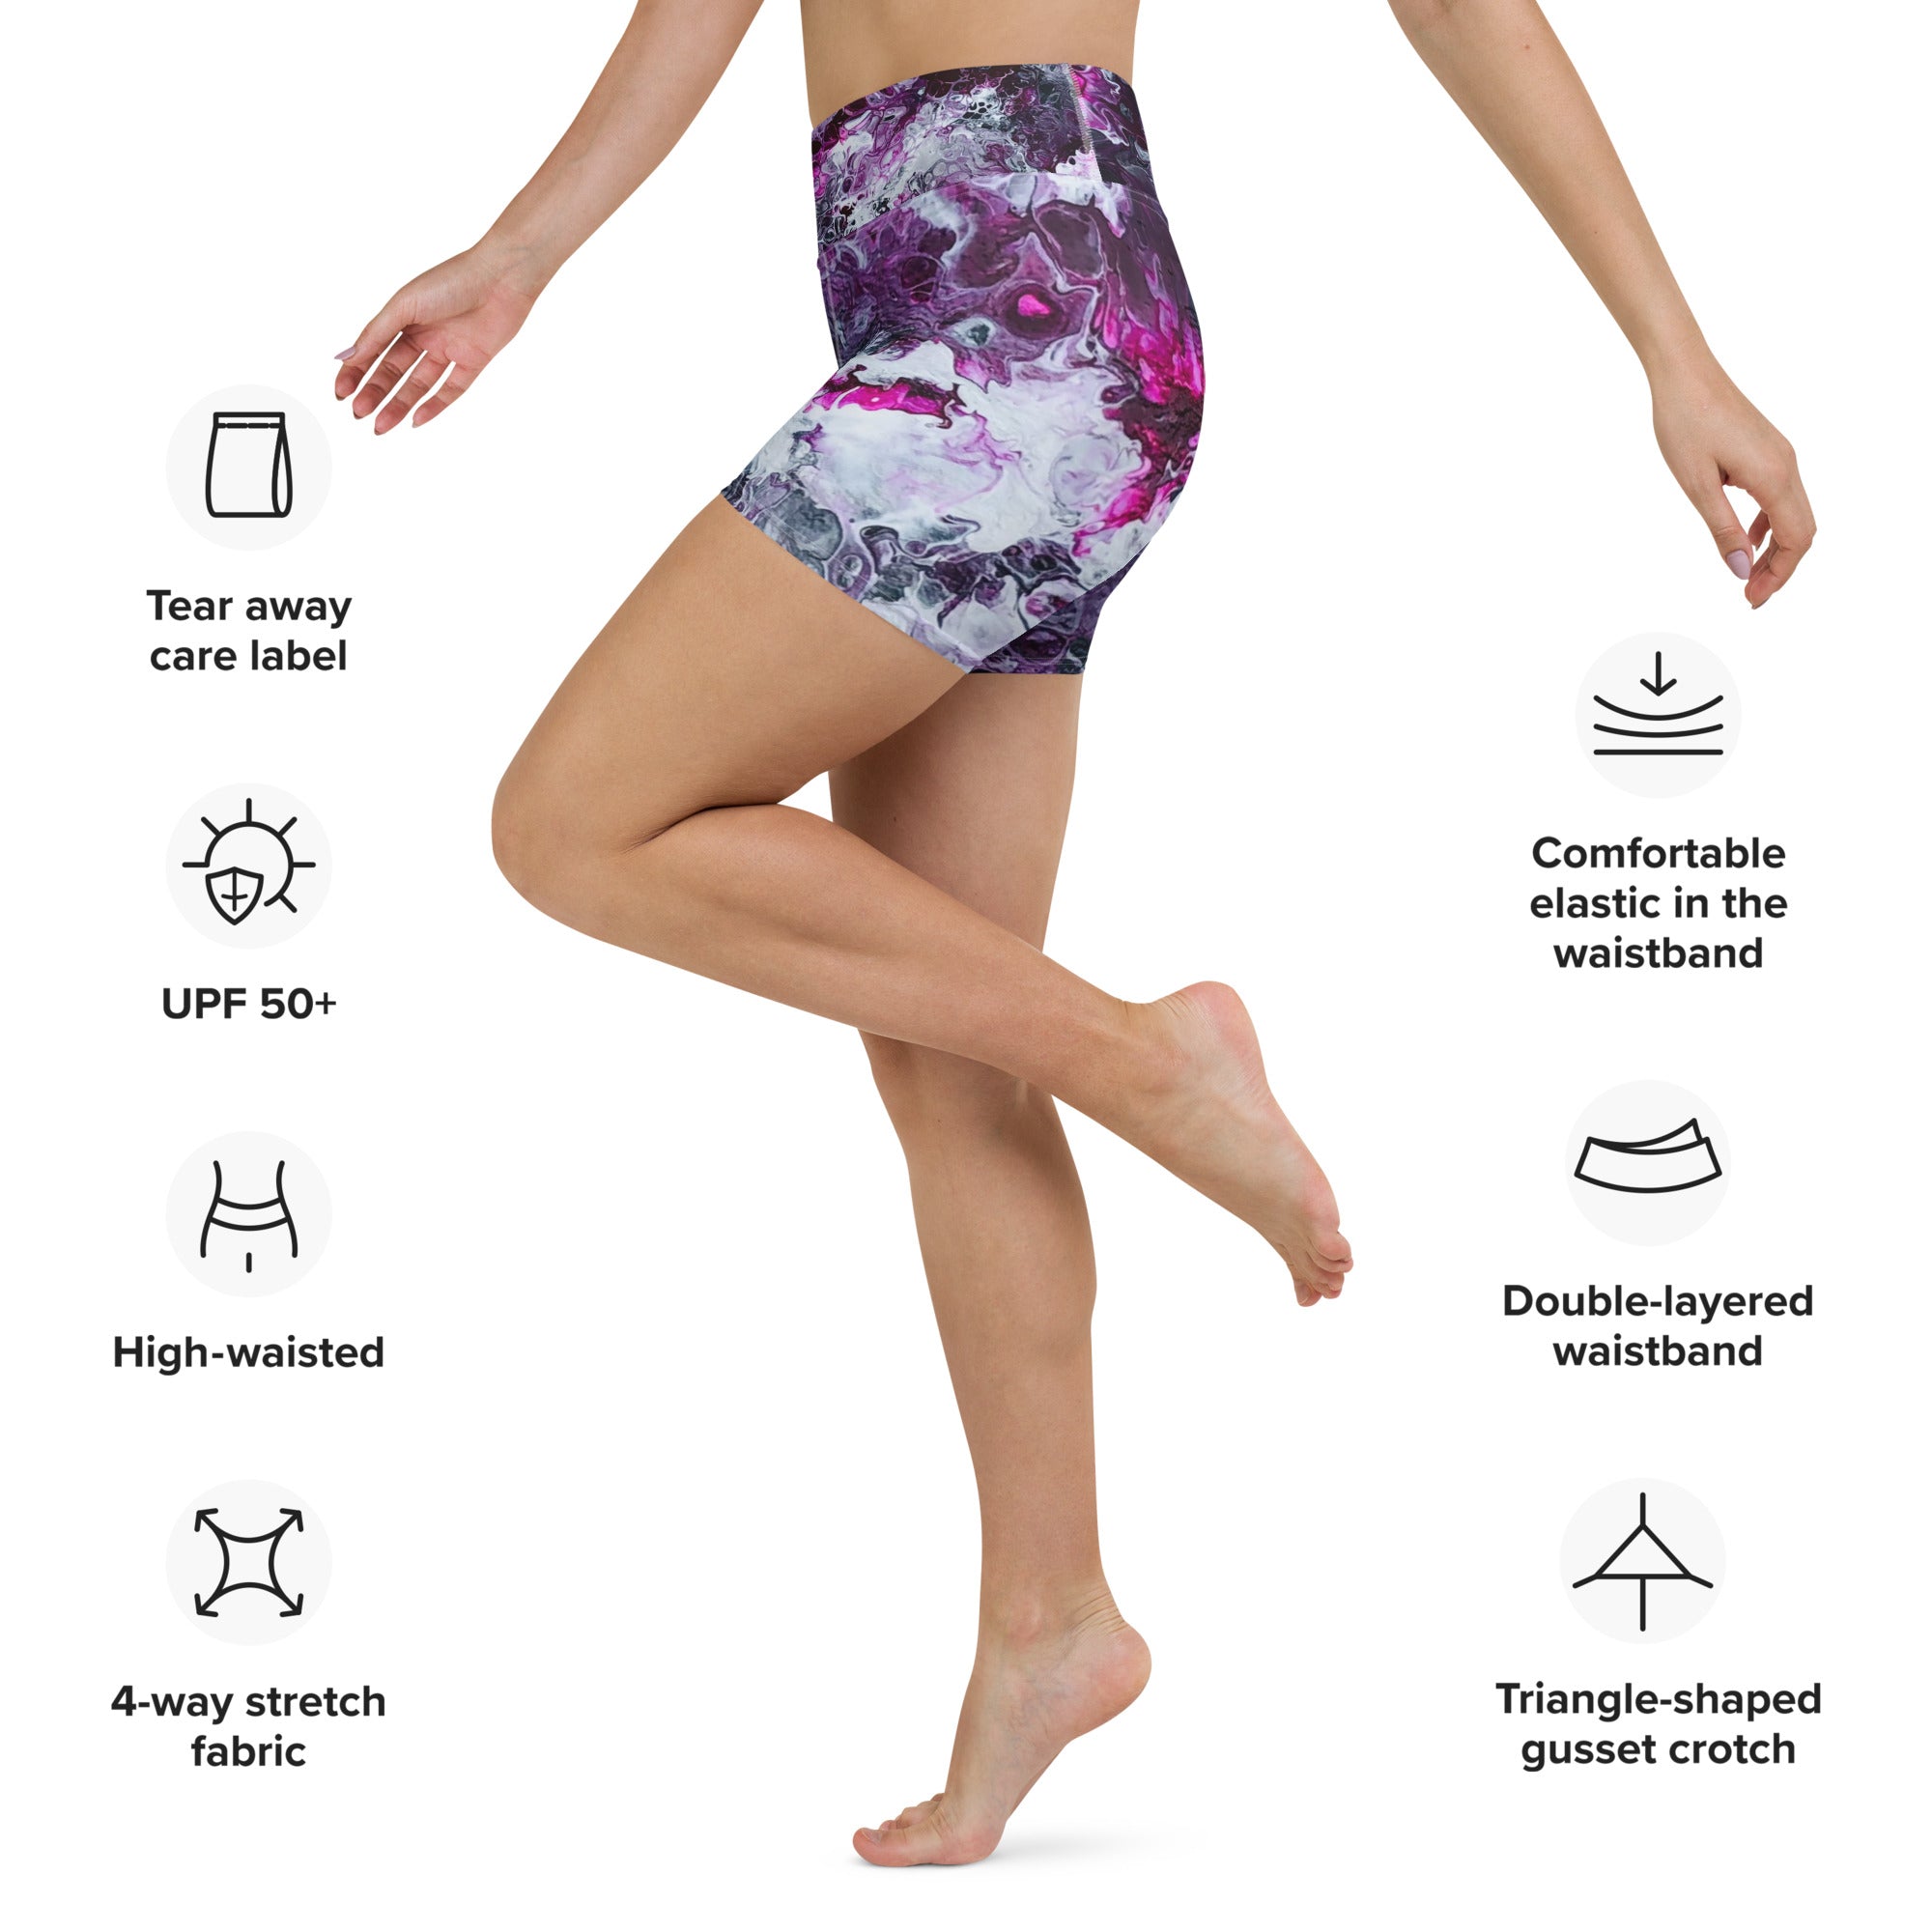 Purple Haze Yoga Shorts